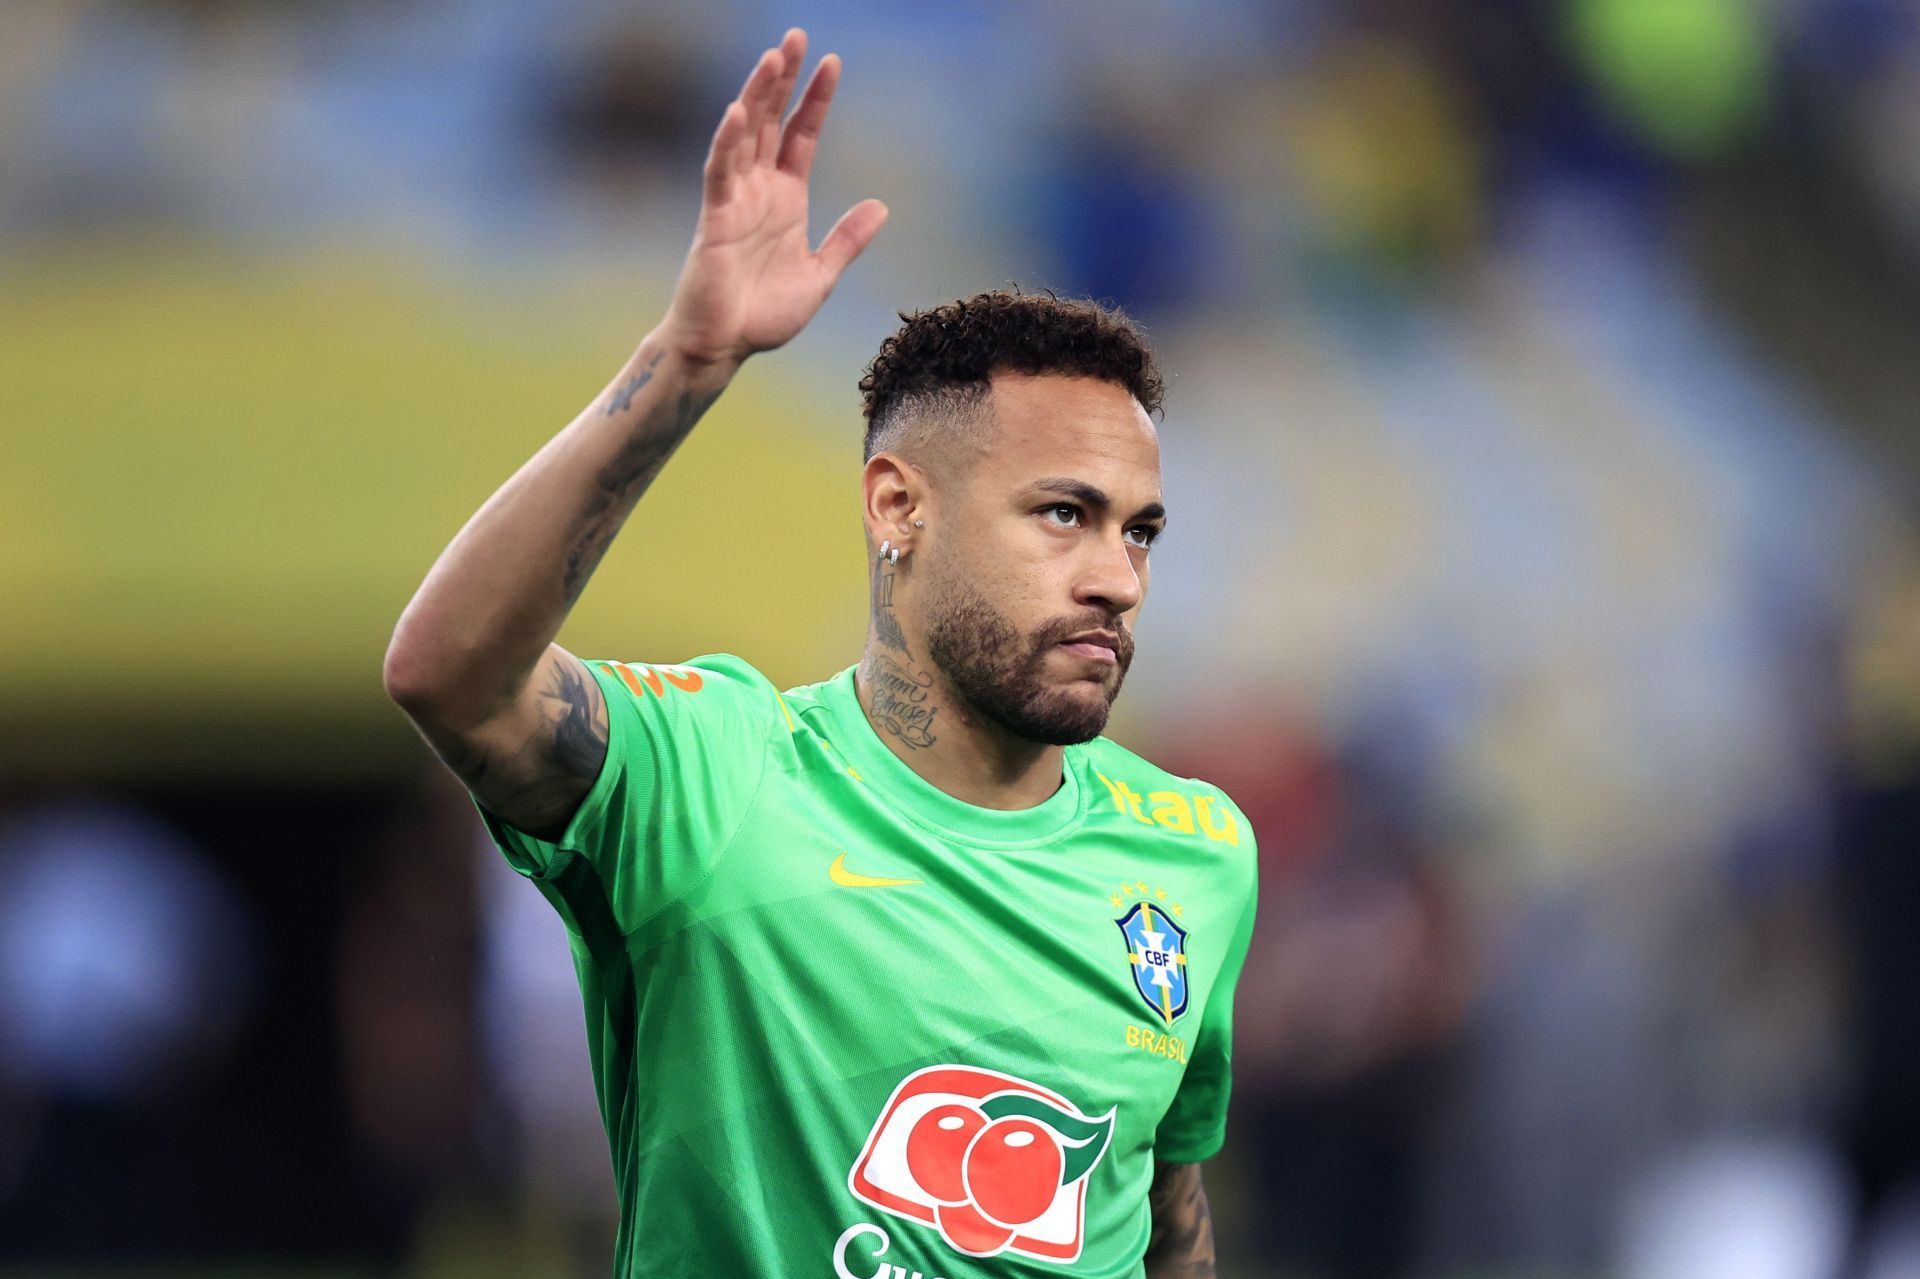 Neymar has struggled for form at the Parc des Princes this season.